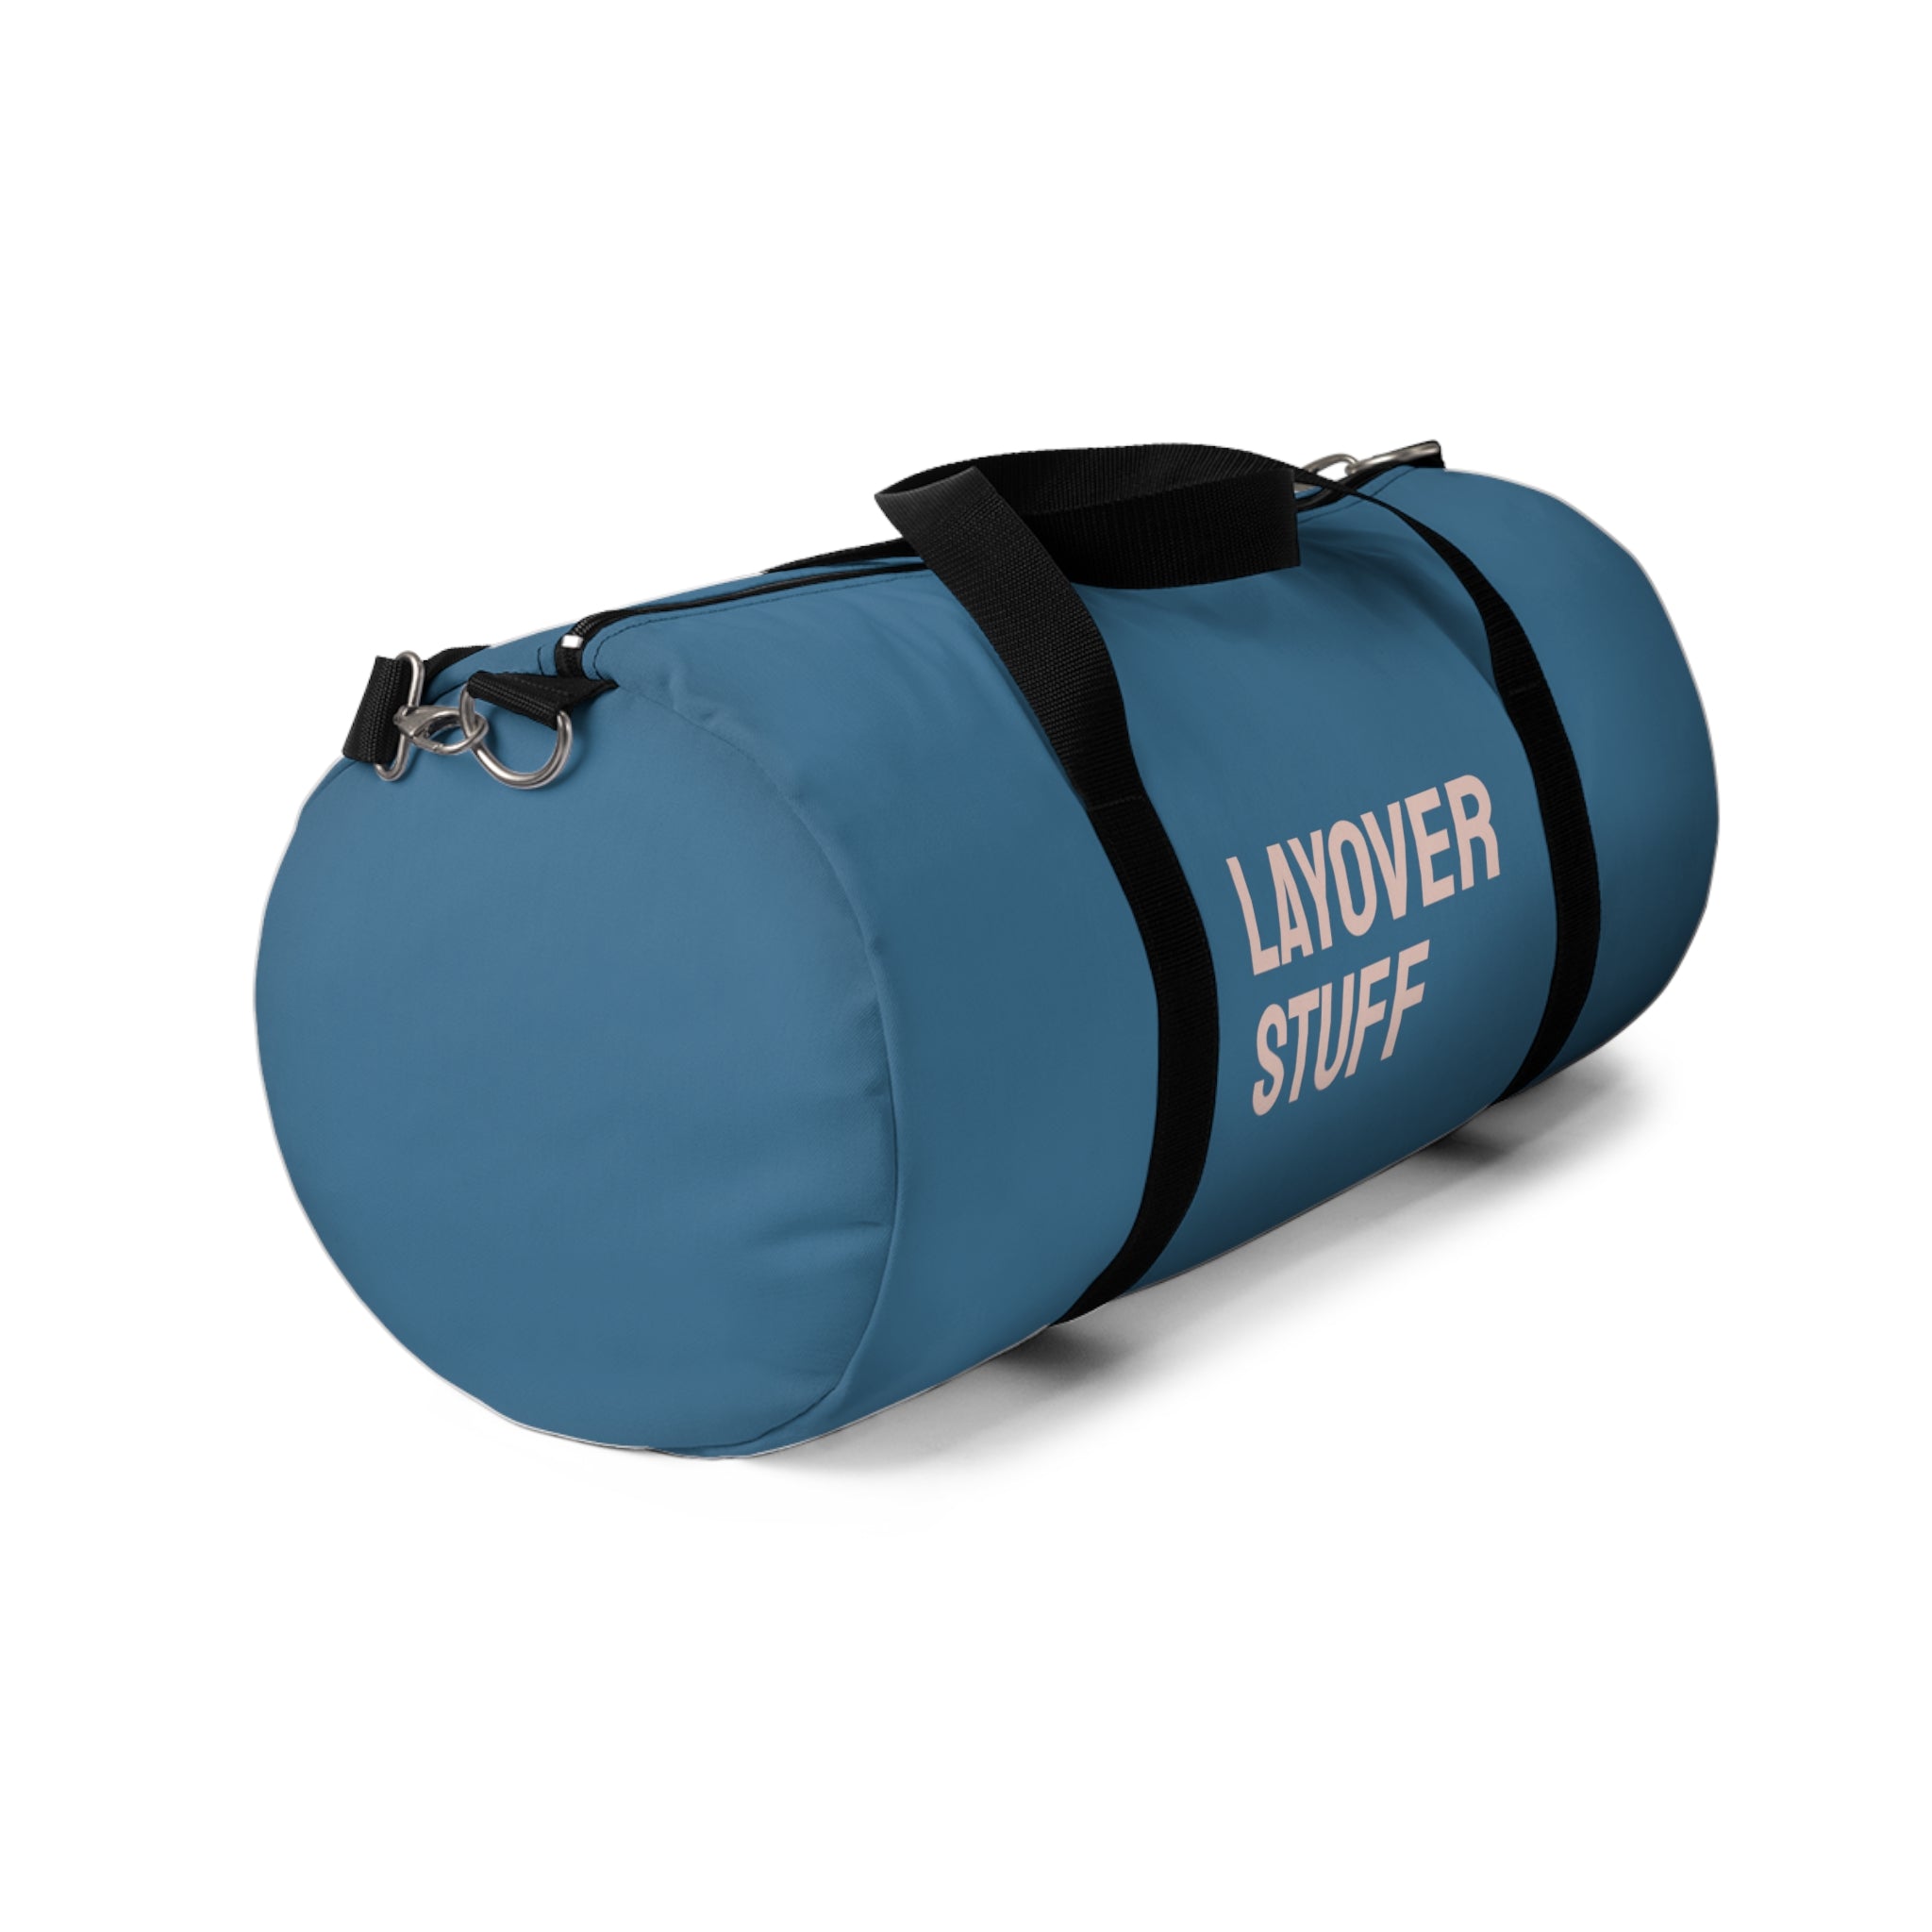 Layover stuff Duffle Bag (Blue)